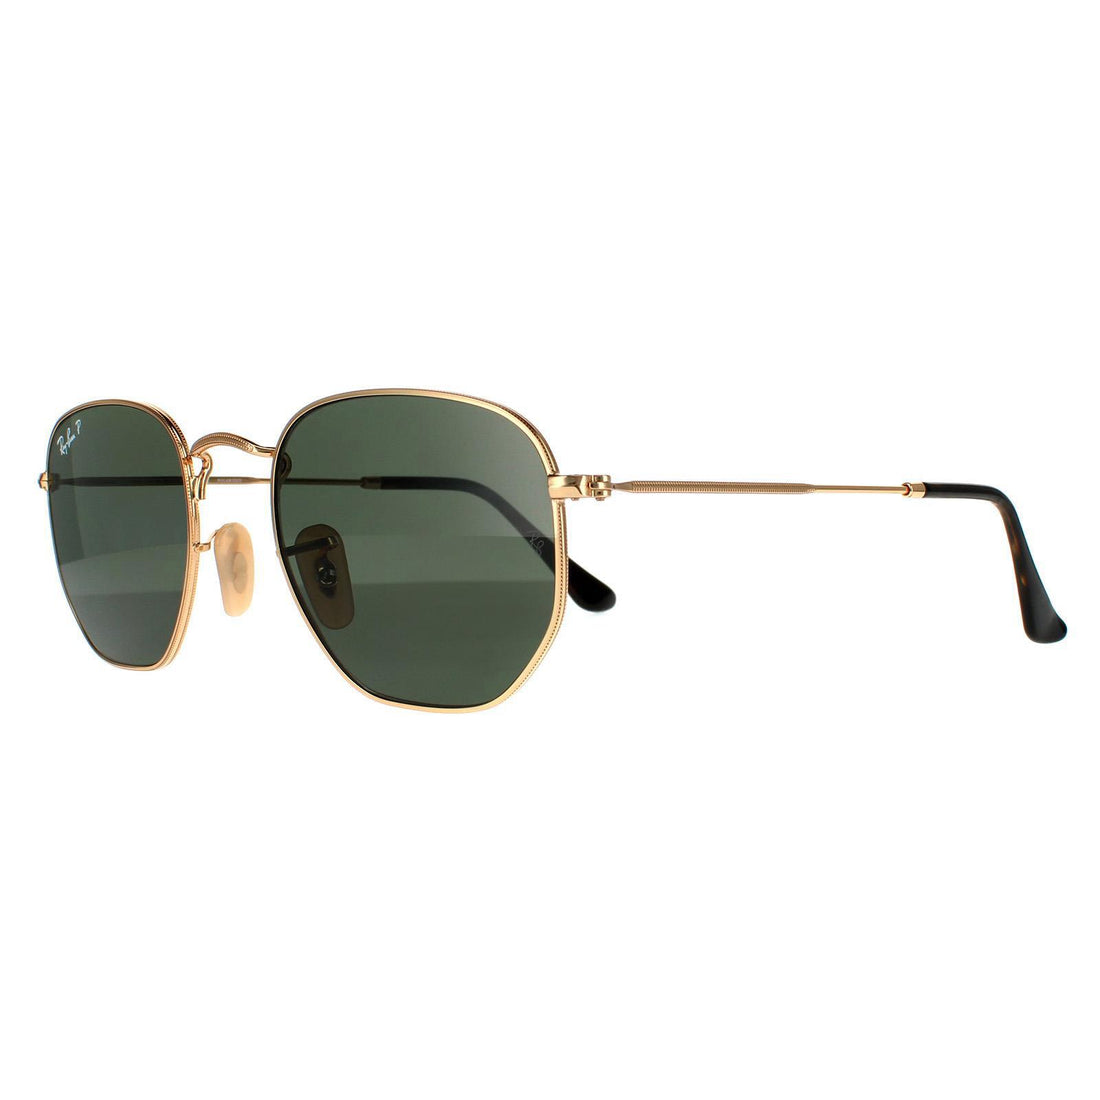 Ray-Ban Sunglasses Hexagonal RB3548N 001/58 Gold G-15 Green Polarized